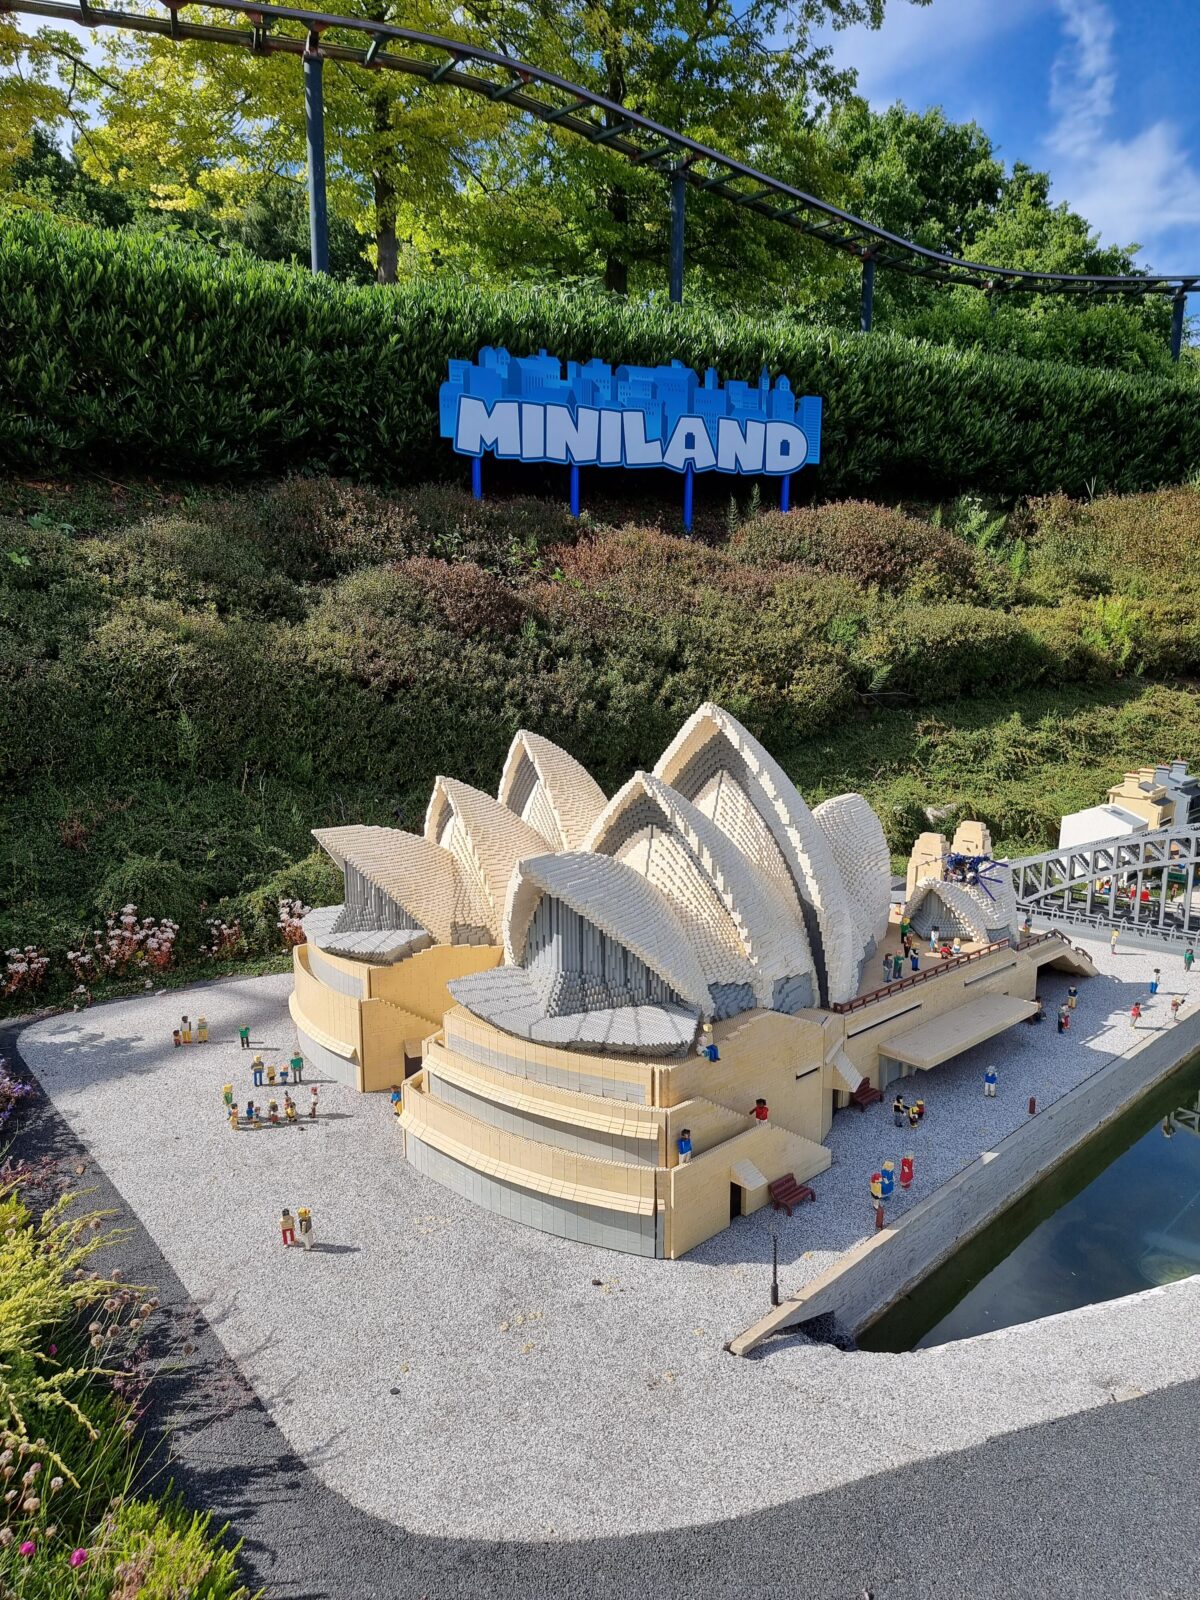 Sydney Australia at Miniland